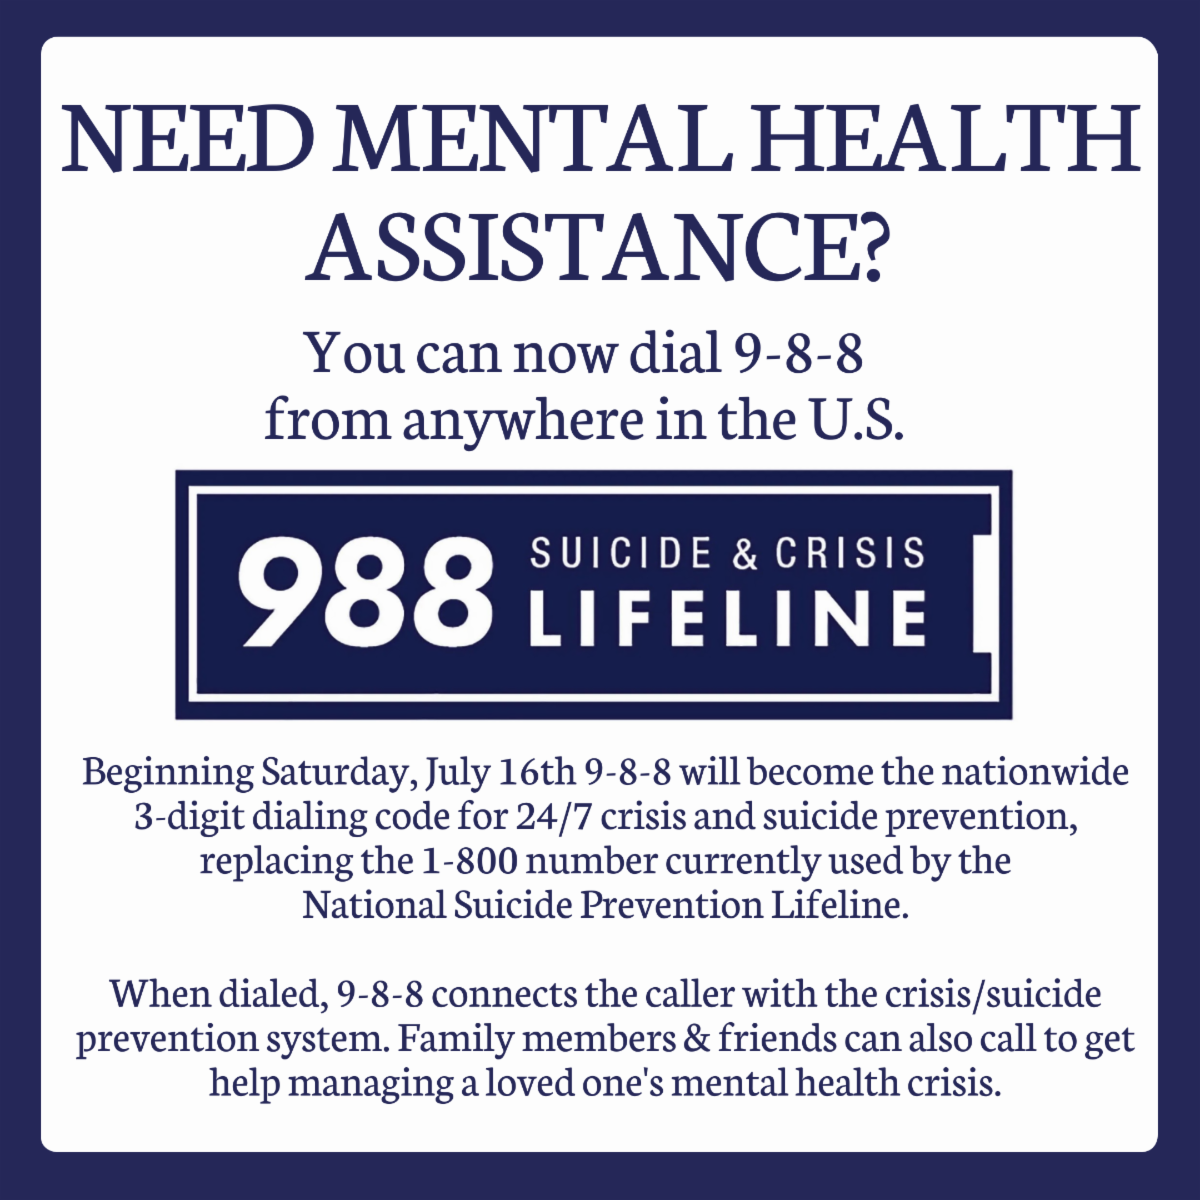 Suicide & Crisis Lifeline - 988 | Midland Park NJ